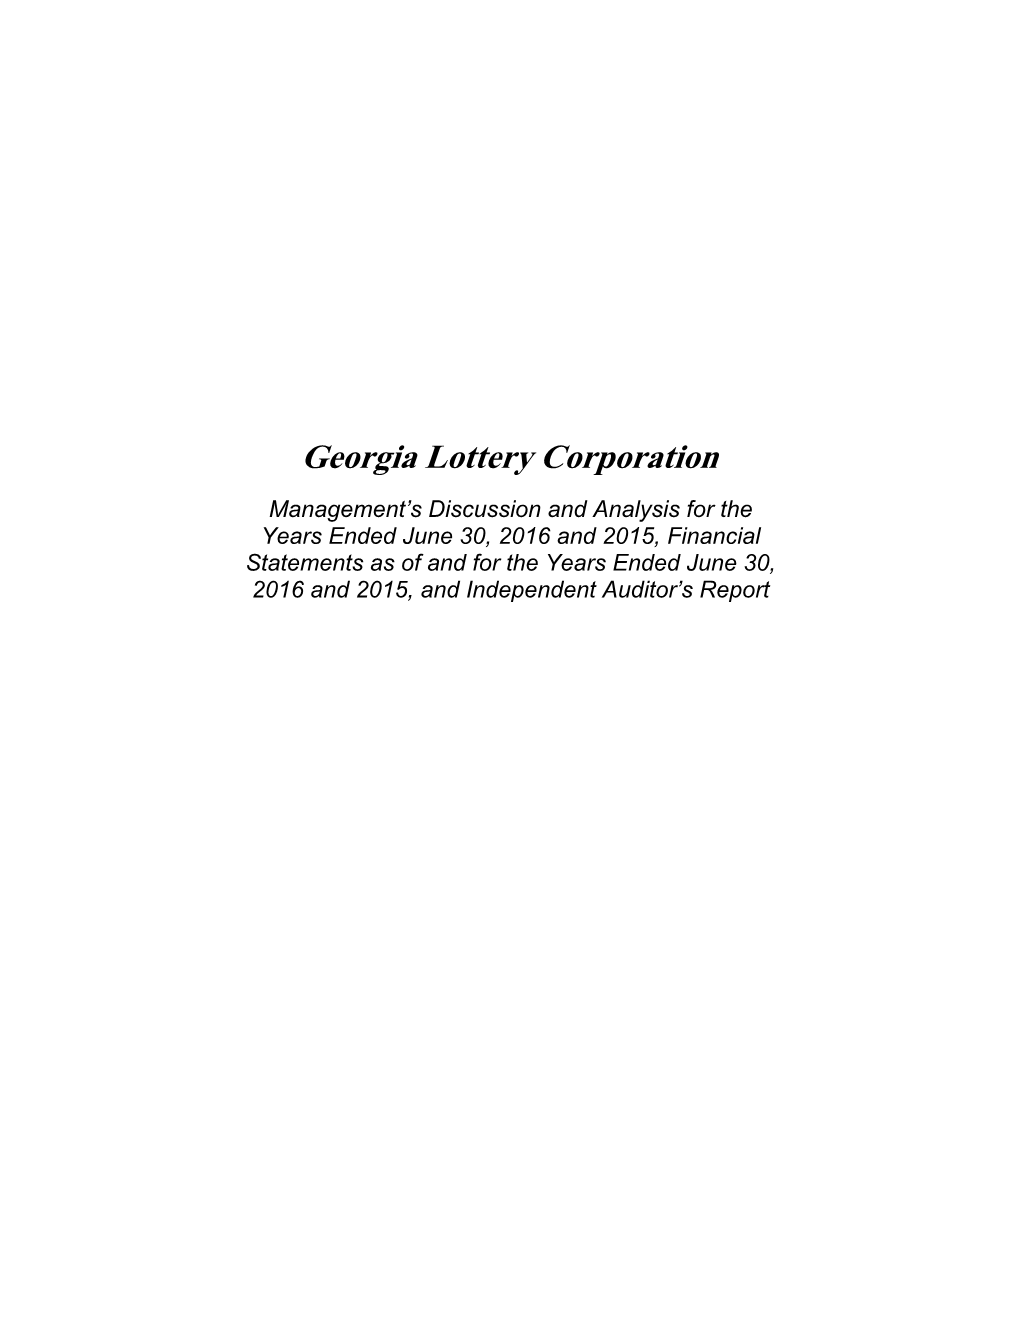 Georgia Lottery 2016 Financial Statements